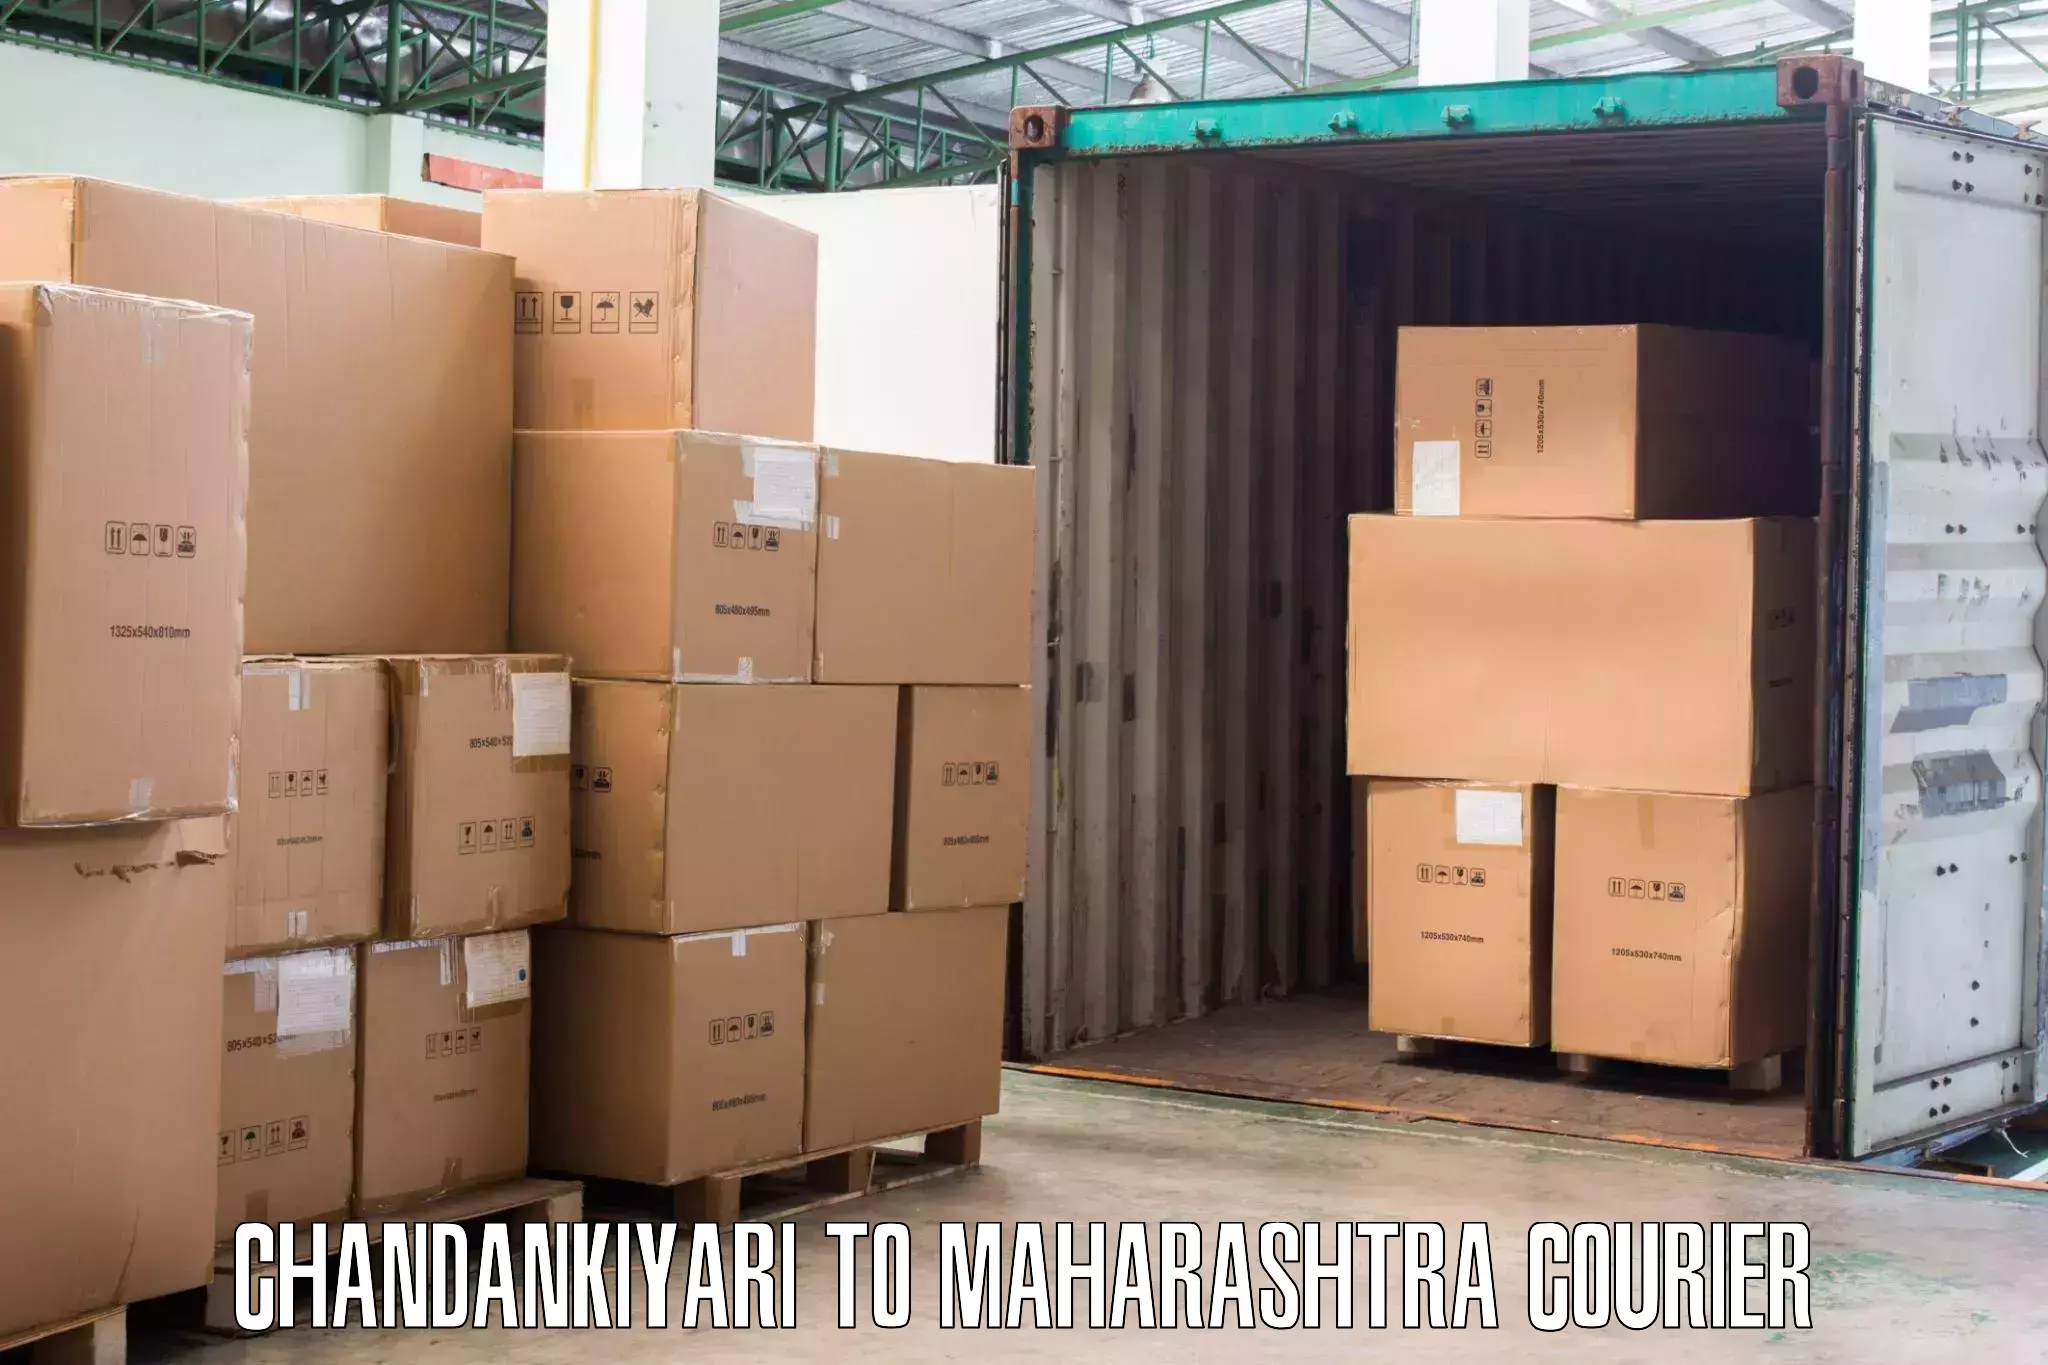 Home goods moving company Chandankiyari to Borivali